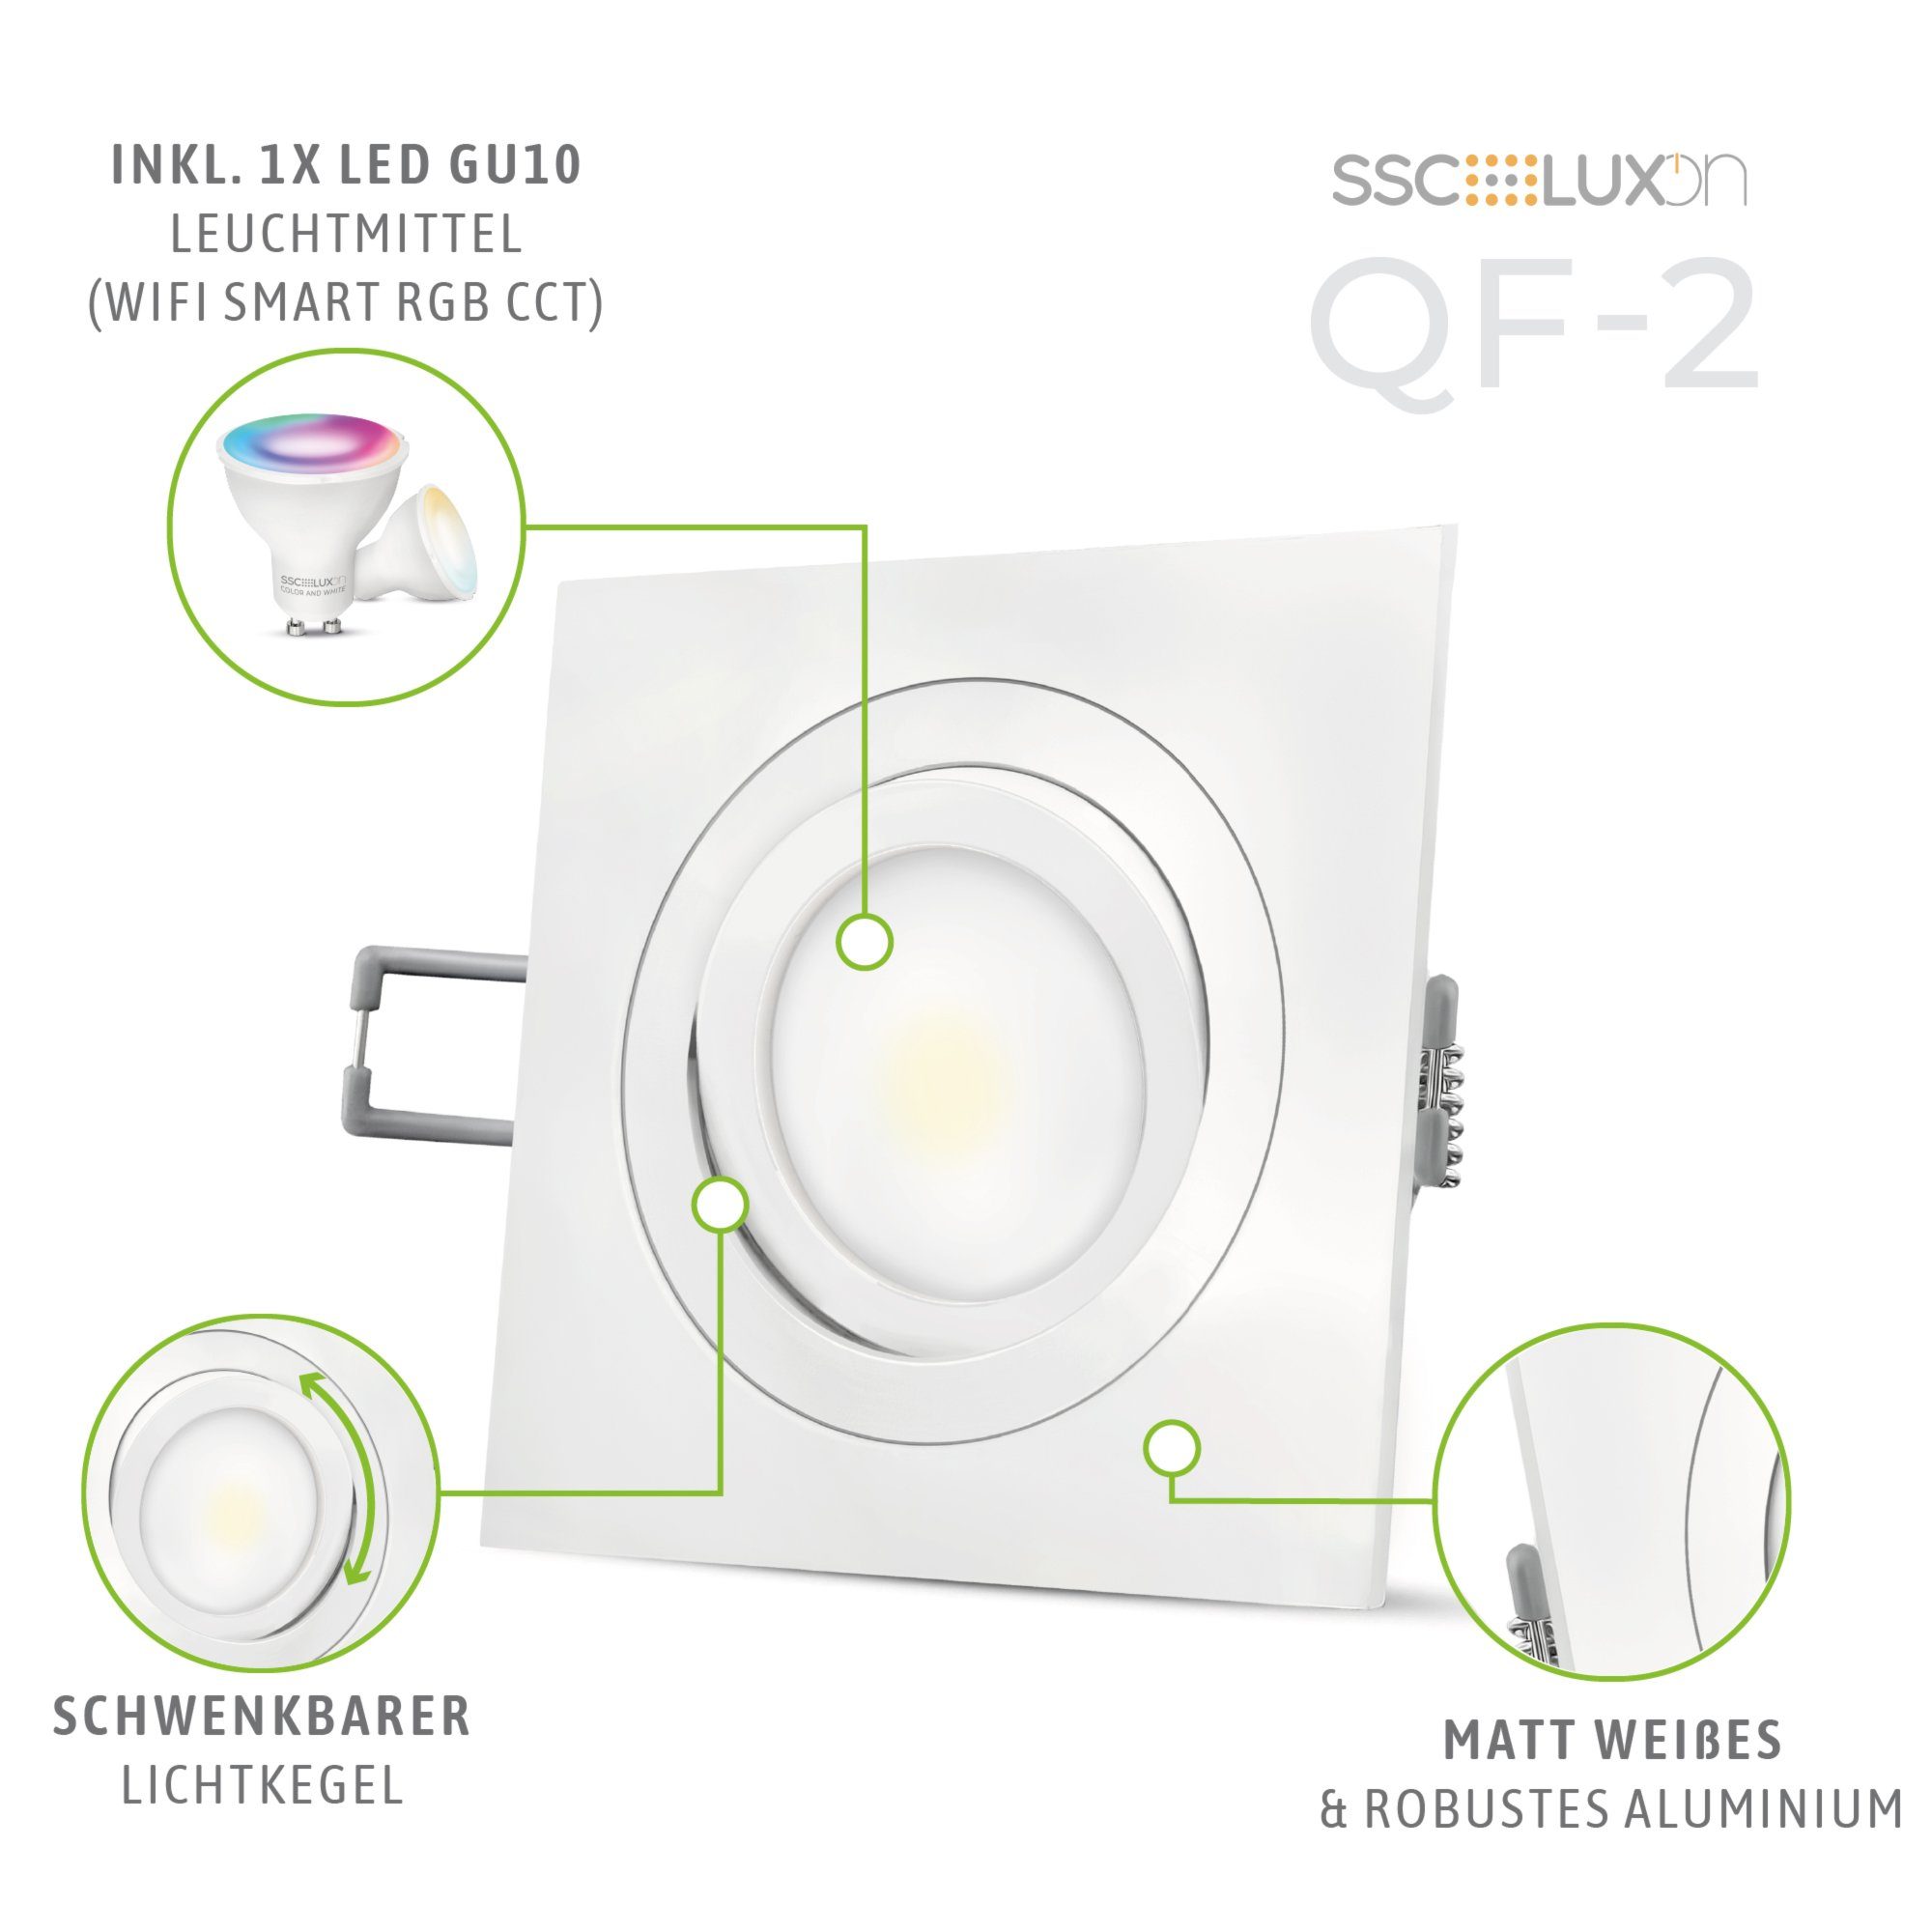 GU10 Lampe mit QF-2 Einbaustrahler LED RGB schwenkbar RGB LED Einbaustrahler dimmbar, SSC-LUXon Wifi